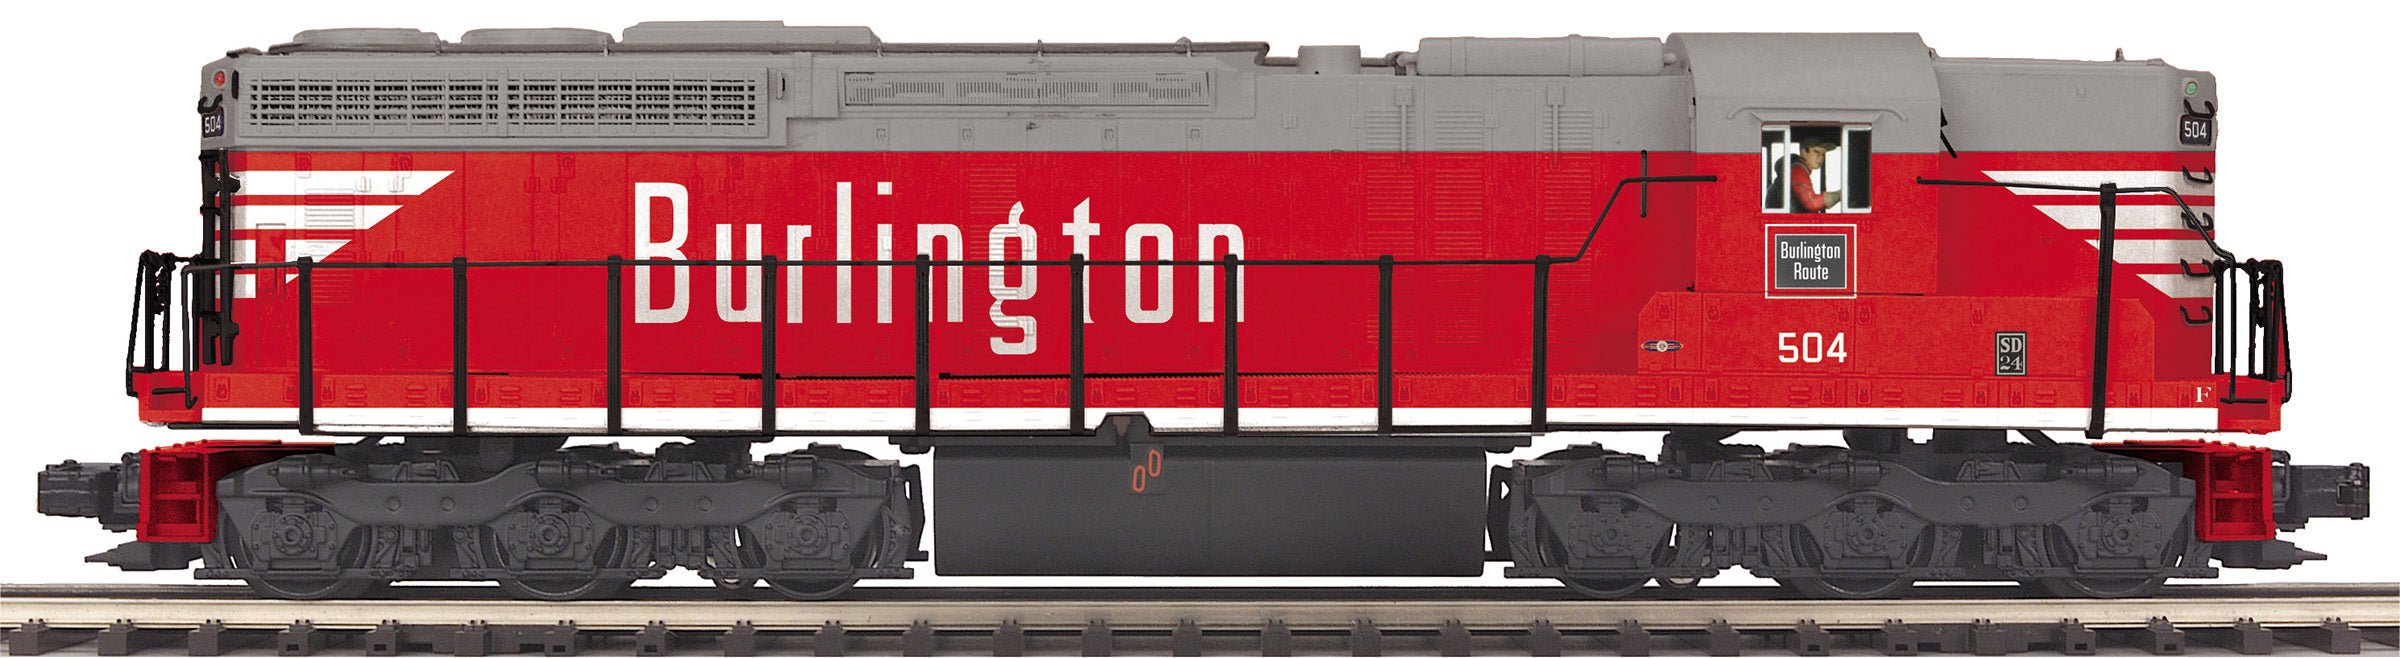 MTH 20-21718-1 - SD24 Diesel Engine "Burlington" #504 w/ PS3